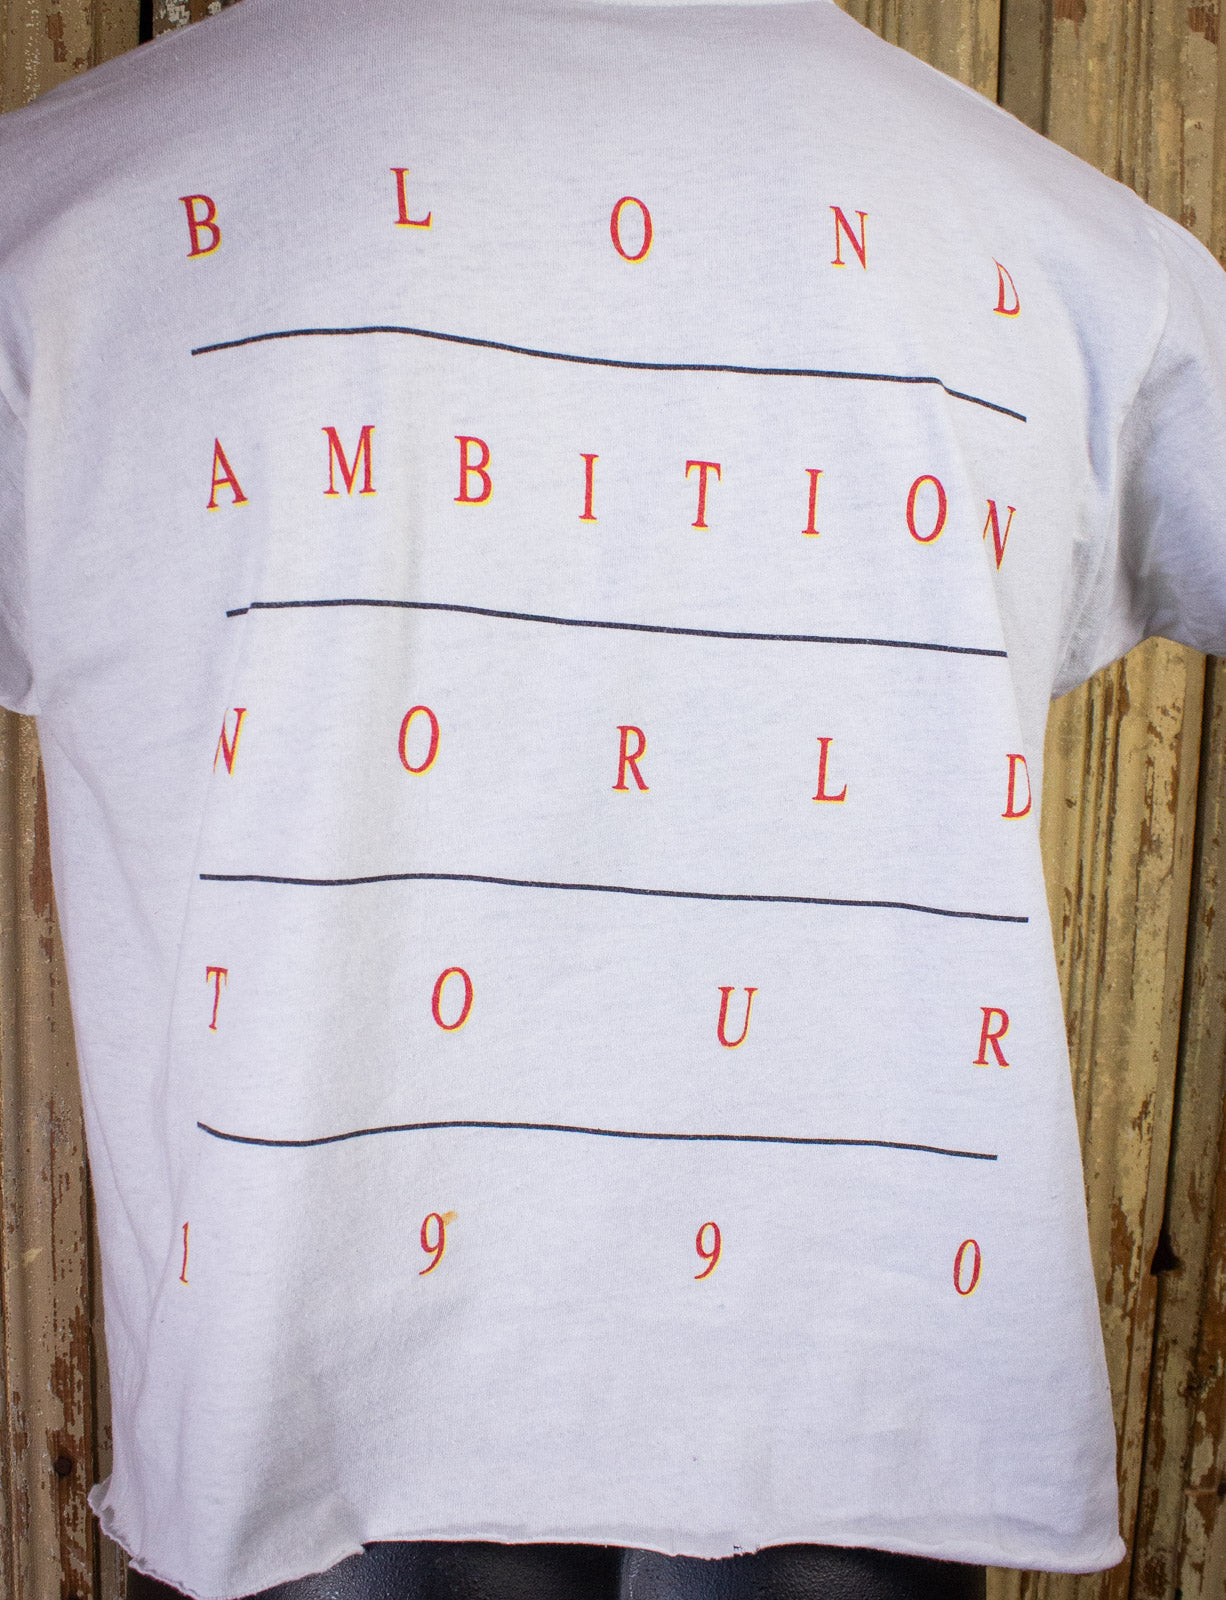 Vintage Madonna Blond Ambition World Tour Cropped Concert T Shirt 1990 White Medium